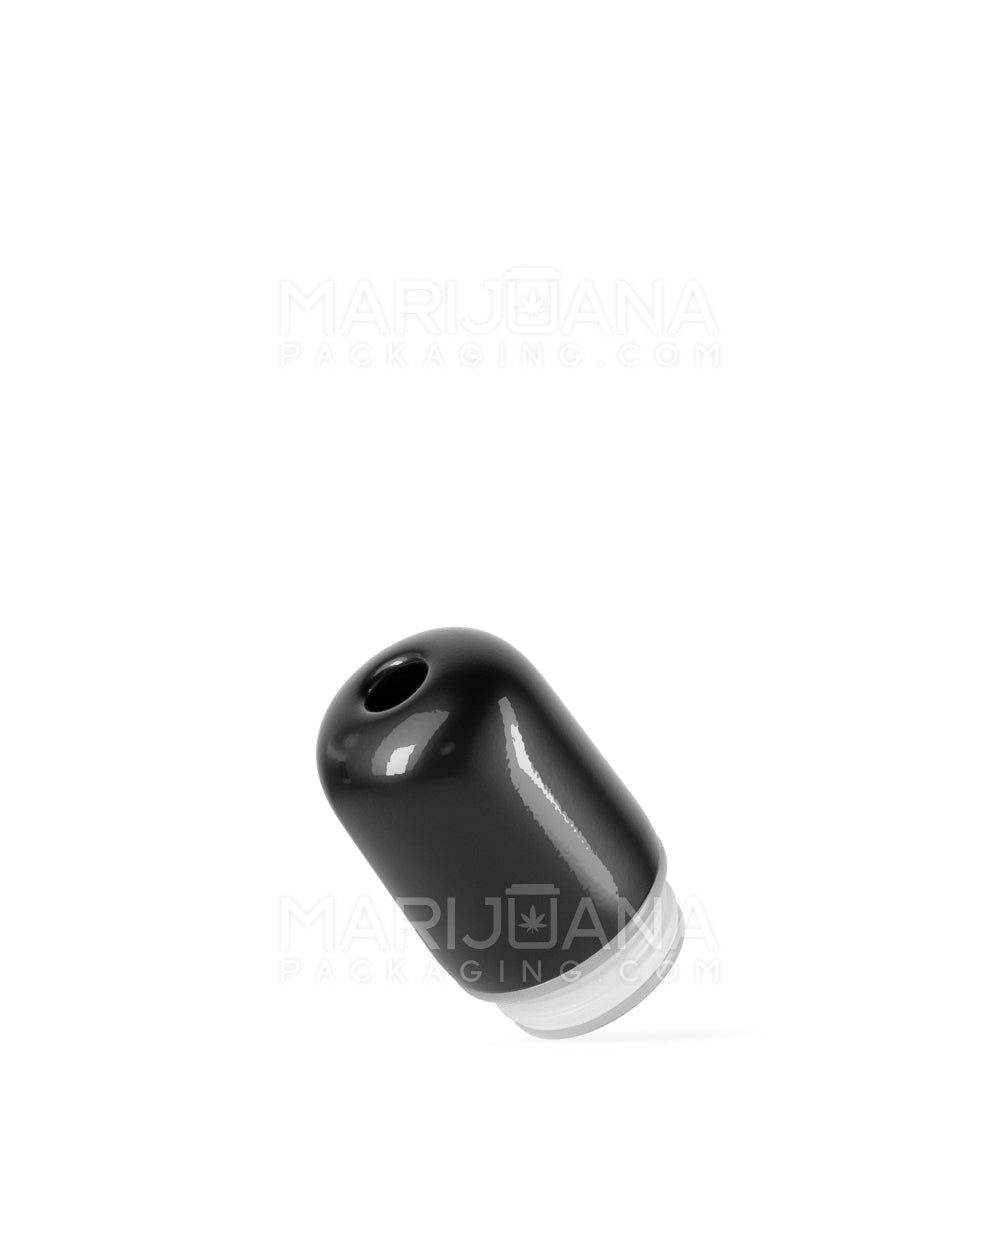 AVD | Round Vape Mouthpiece for Glass Cartridges | Black Ceramic - Eazy Press - 600 Count - 4